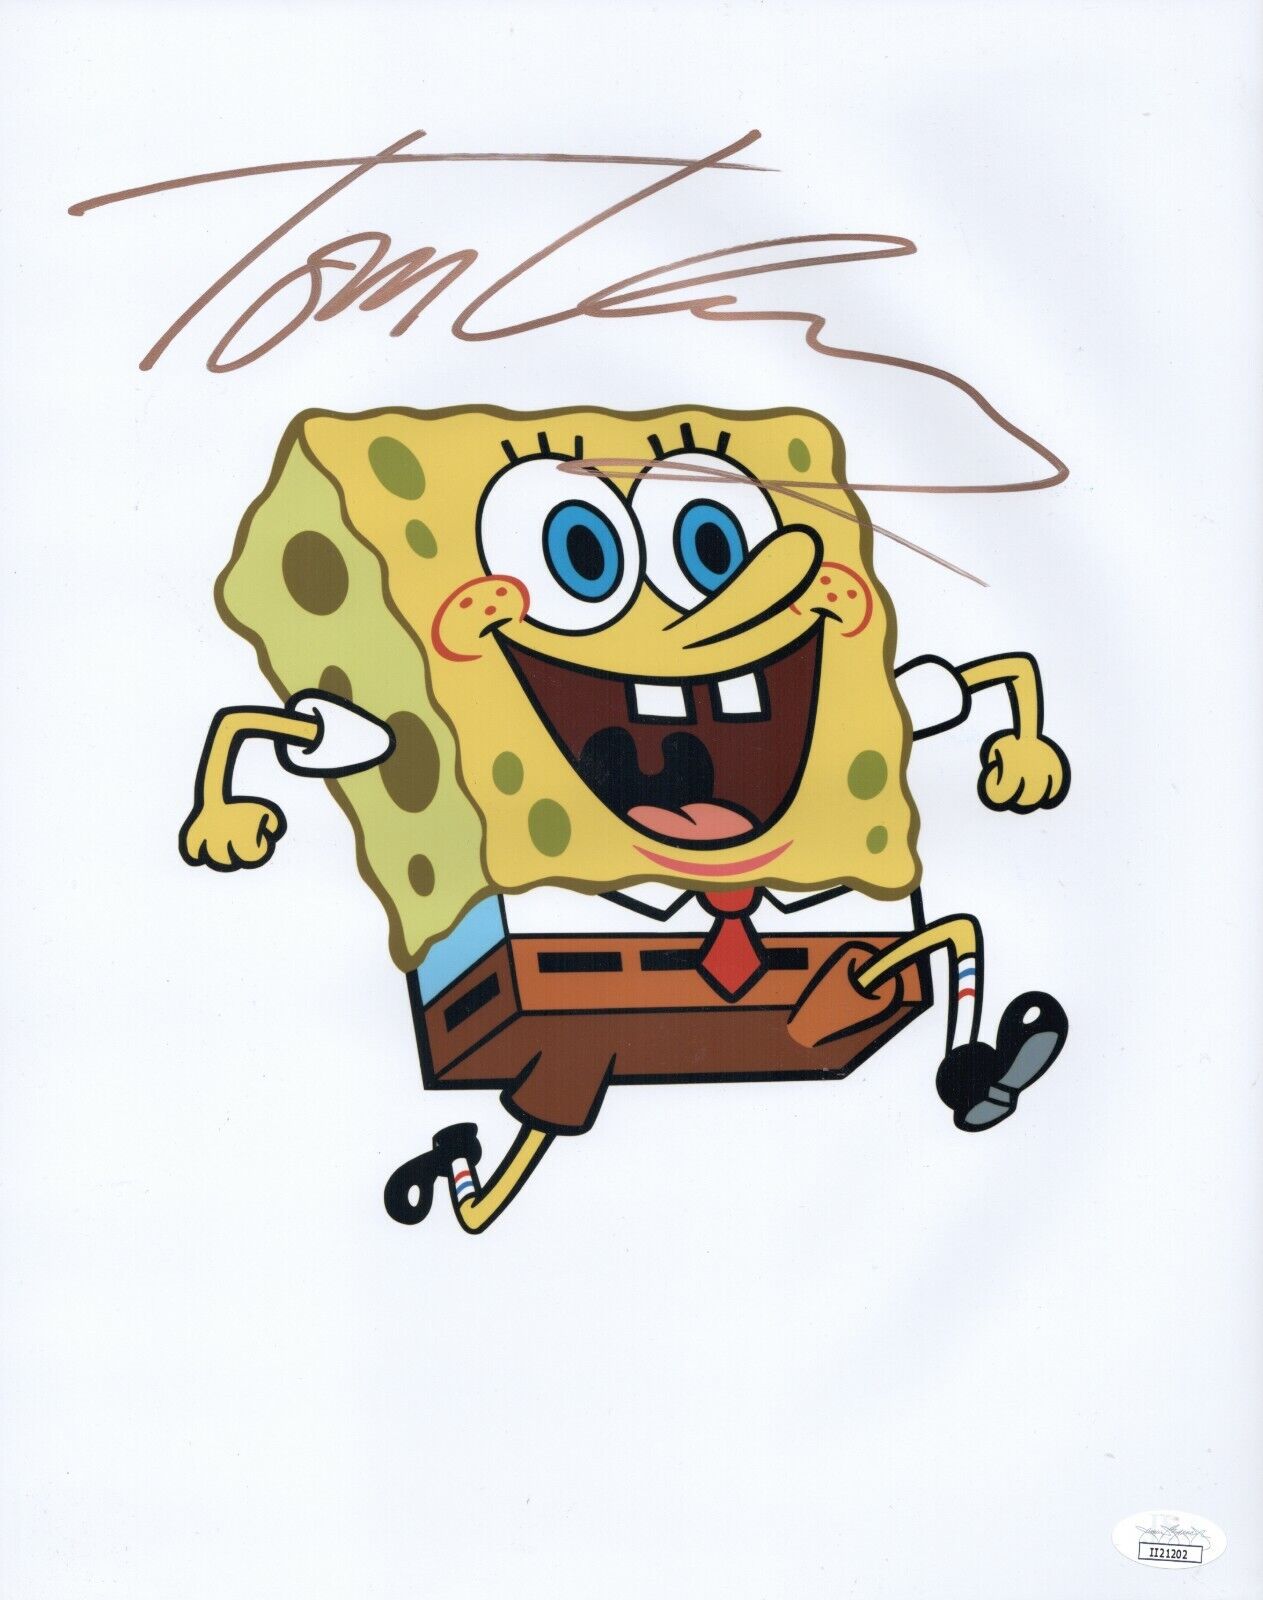 TOM KENNY Spongebob Squarepants 11x14 Photo Poster painting IN PERSON Autograph JSA COA Cert